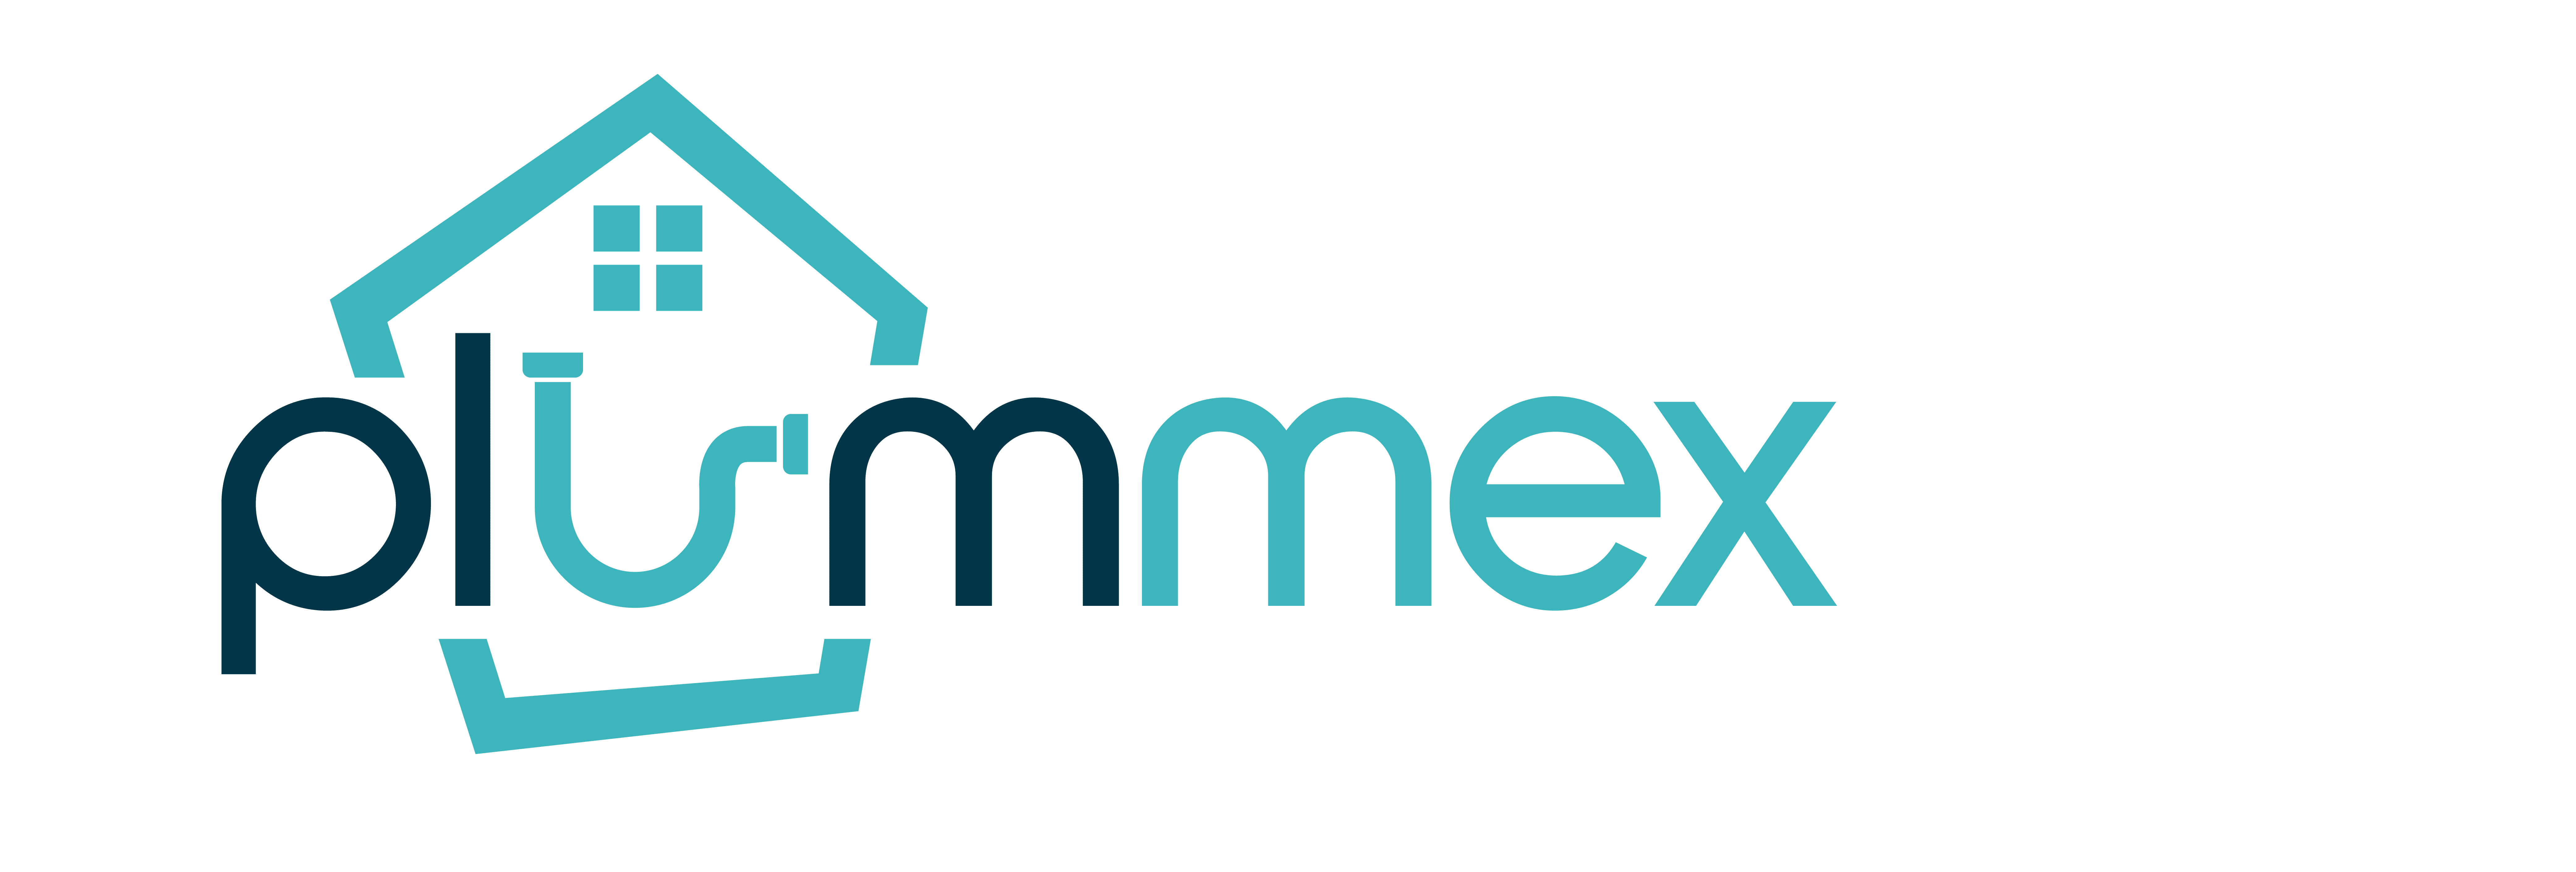 Plum Mex Logo 01 | Plum-Mex, Farnham